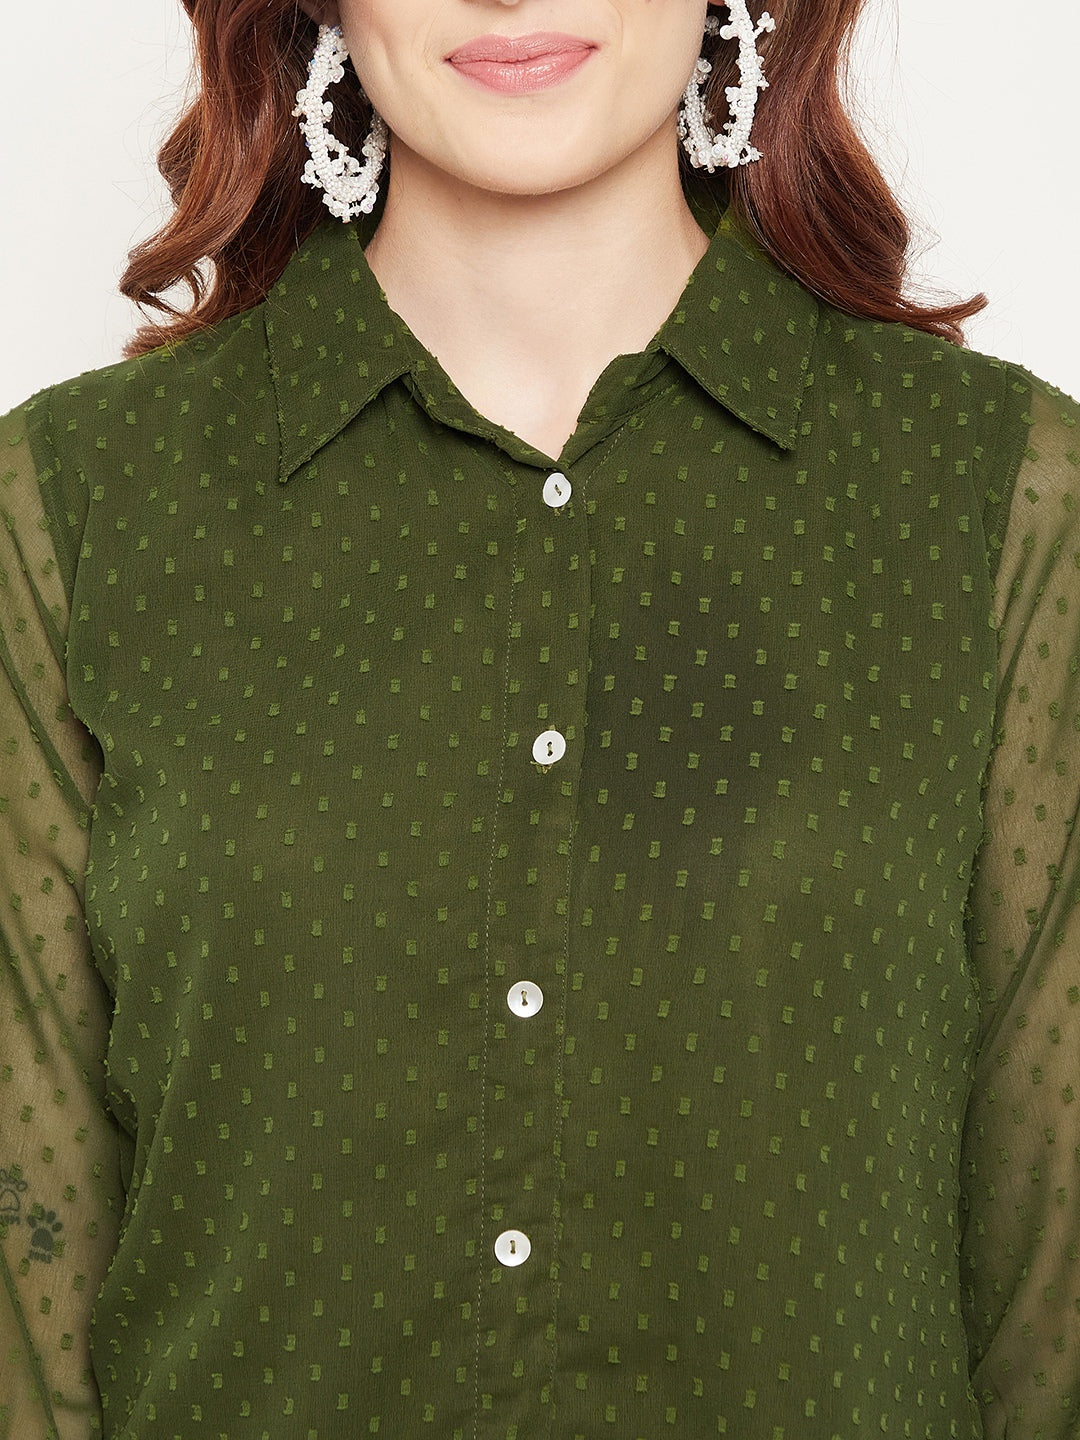 Olive Green Shirt Collar Tunic